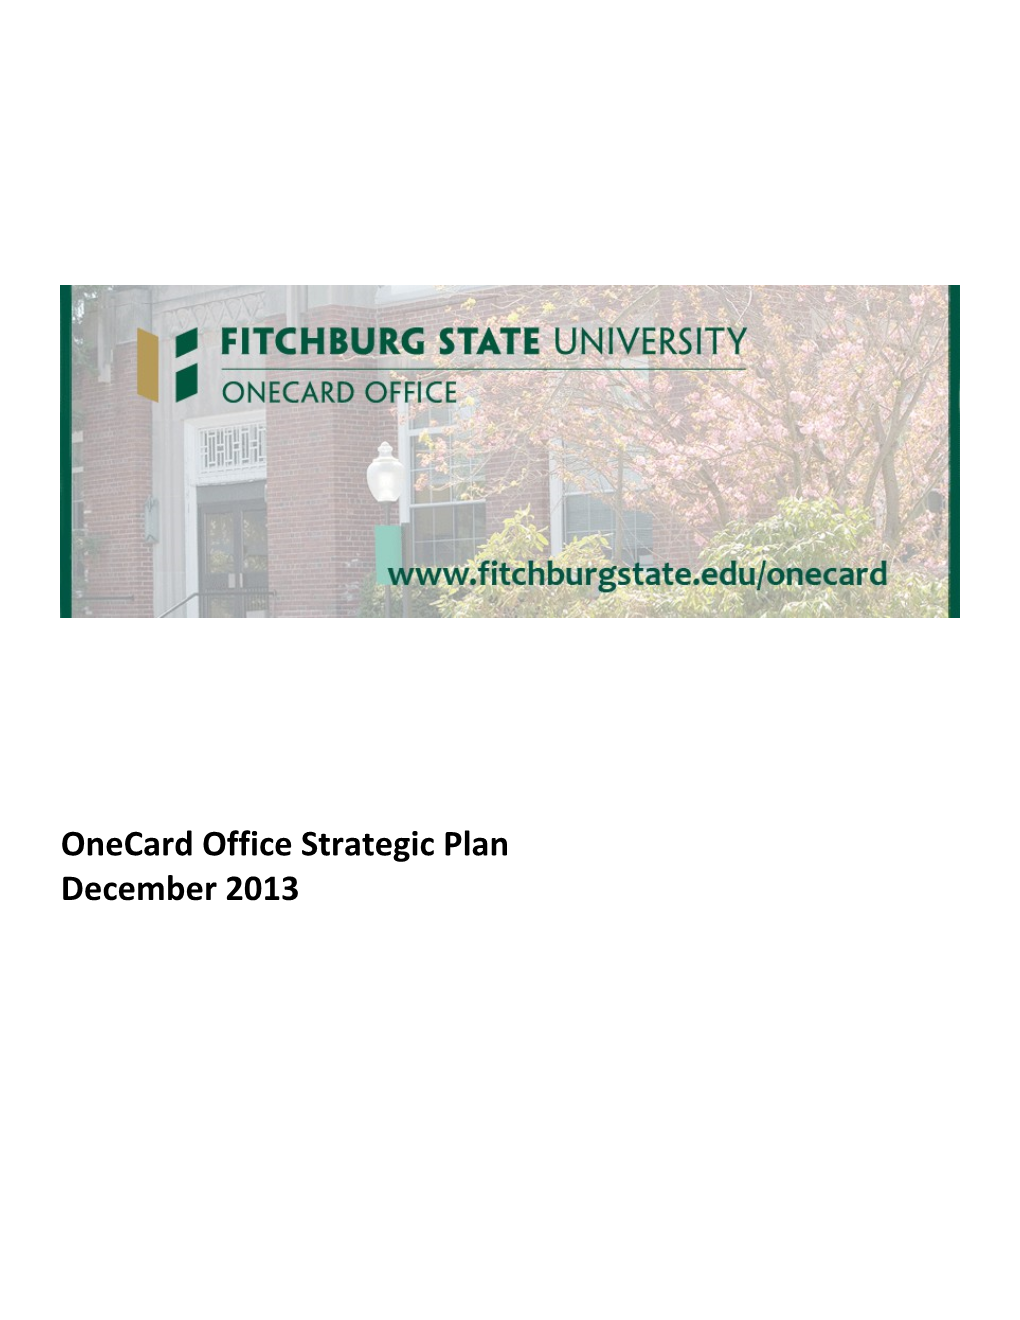 Onecard Office Strategic Plan